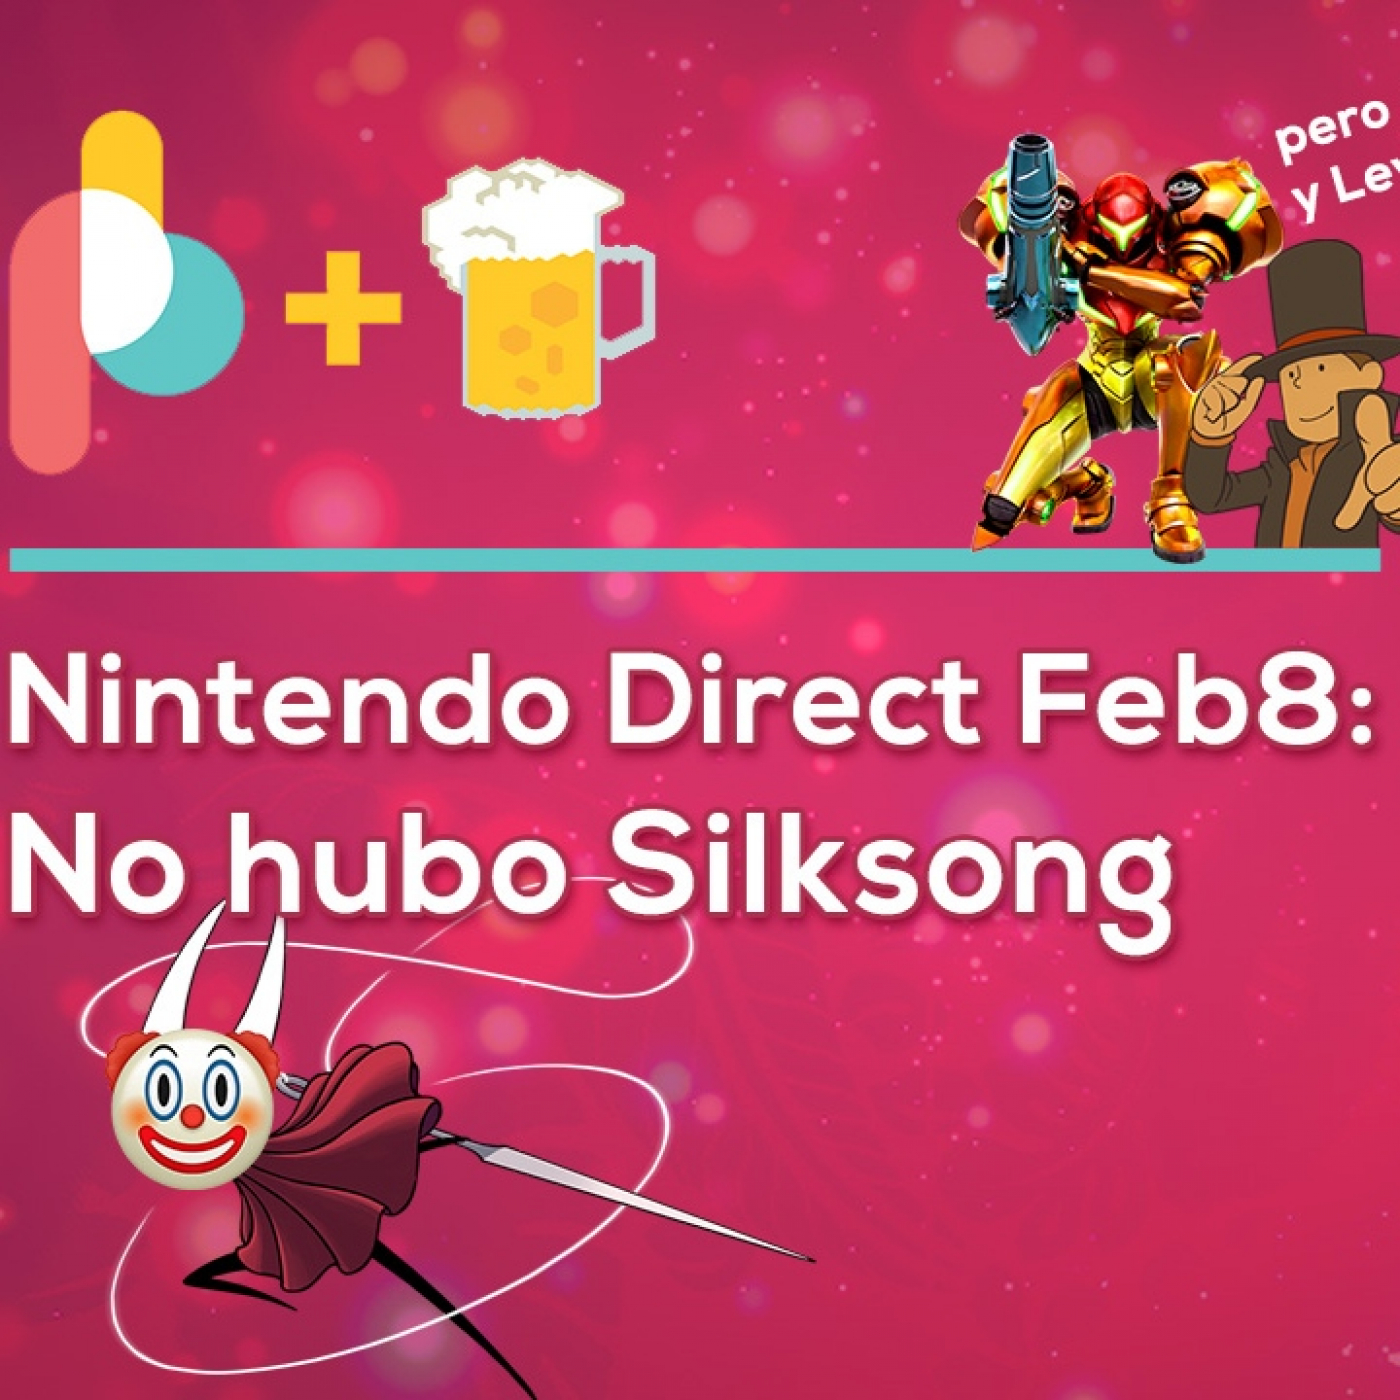 Pixelbits con cerveza 179: Nintendo Direct Feb8 sin Silksong